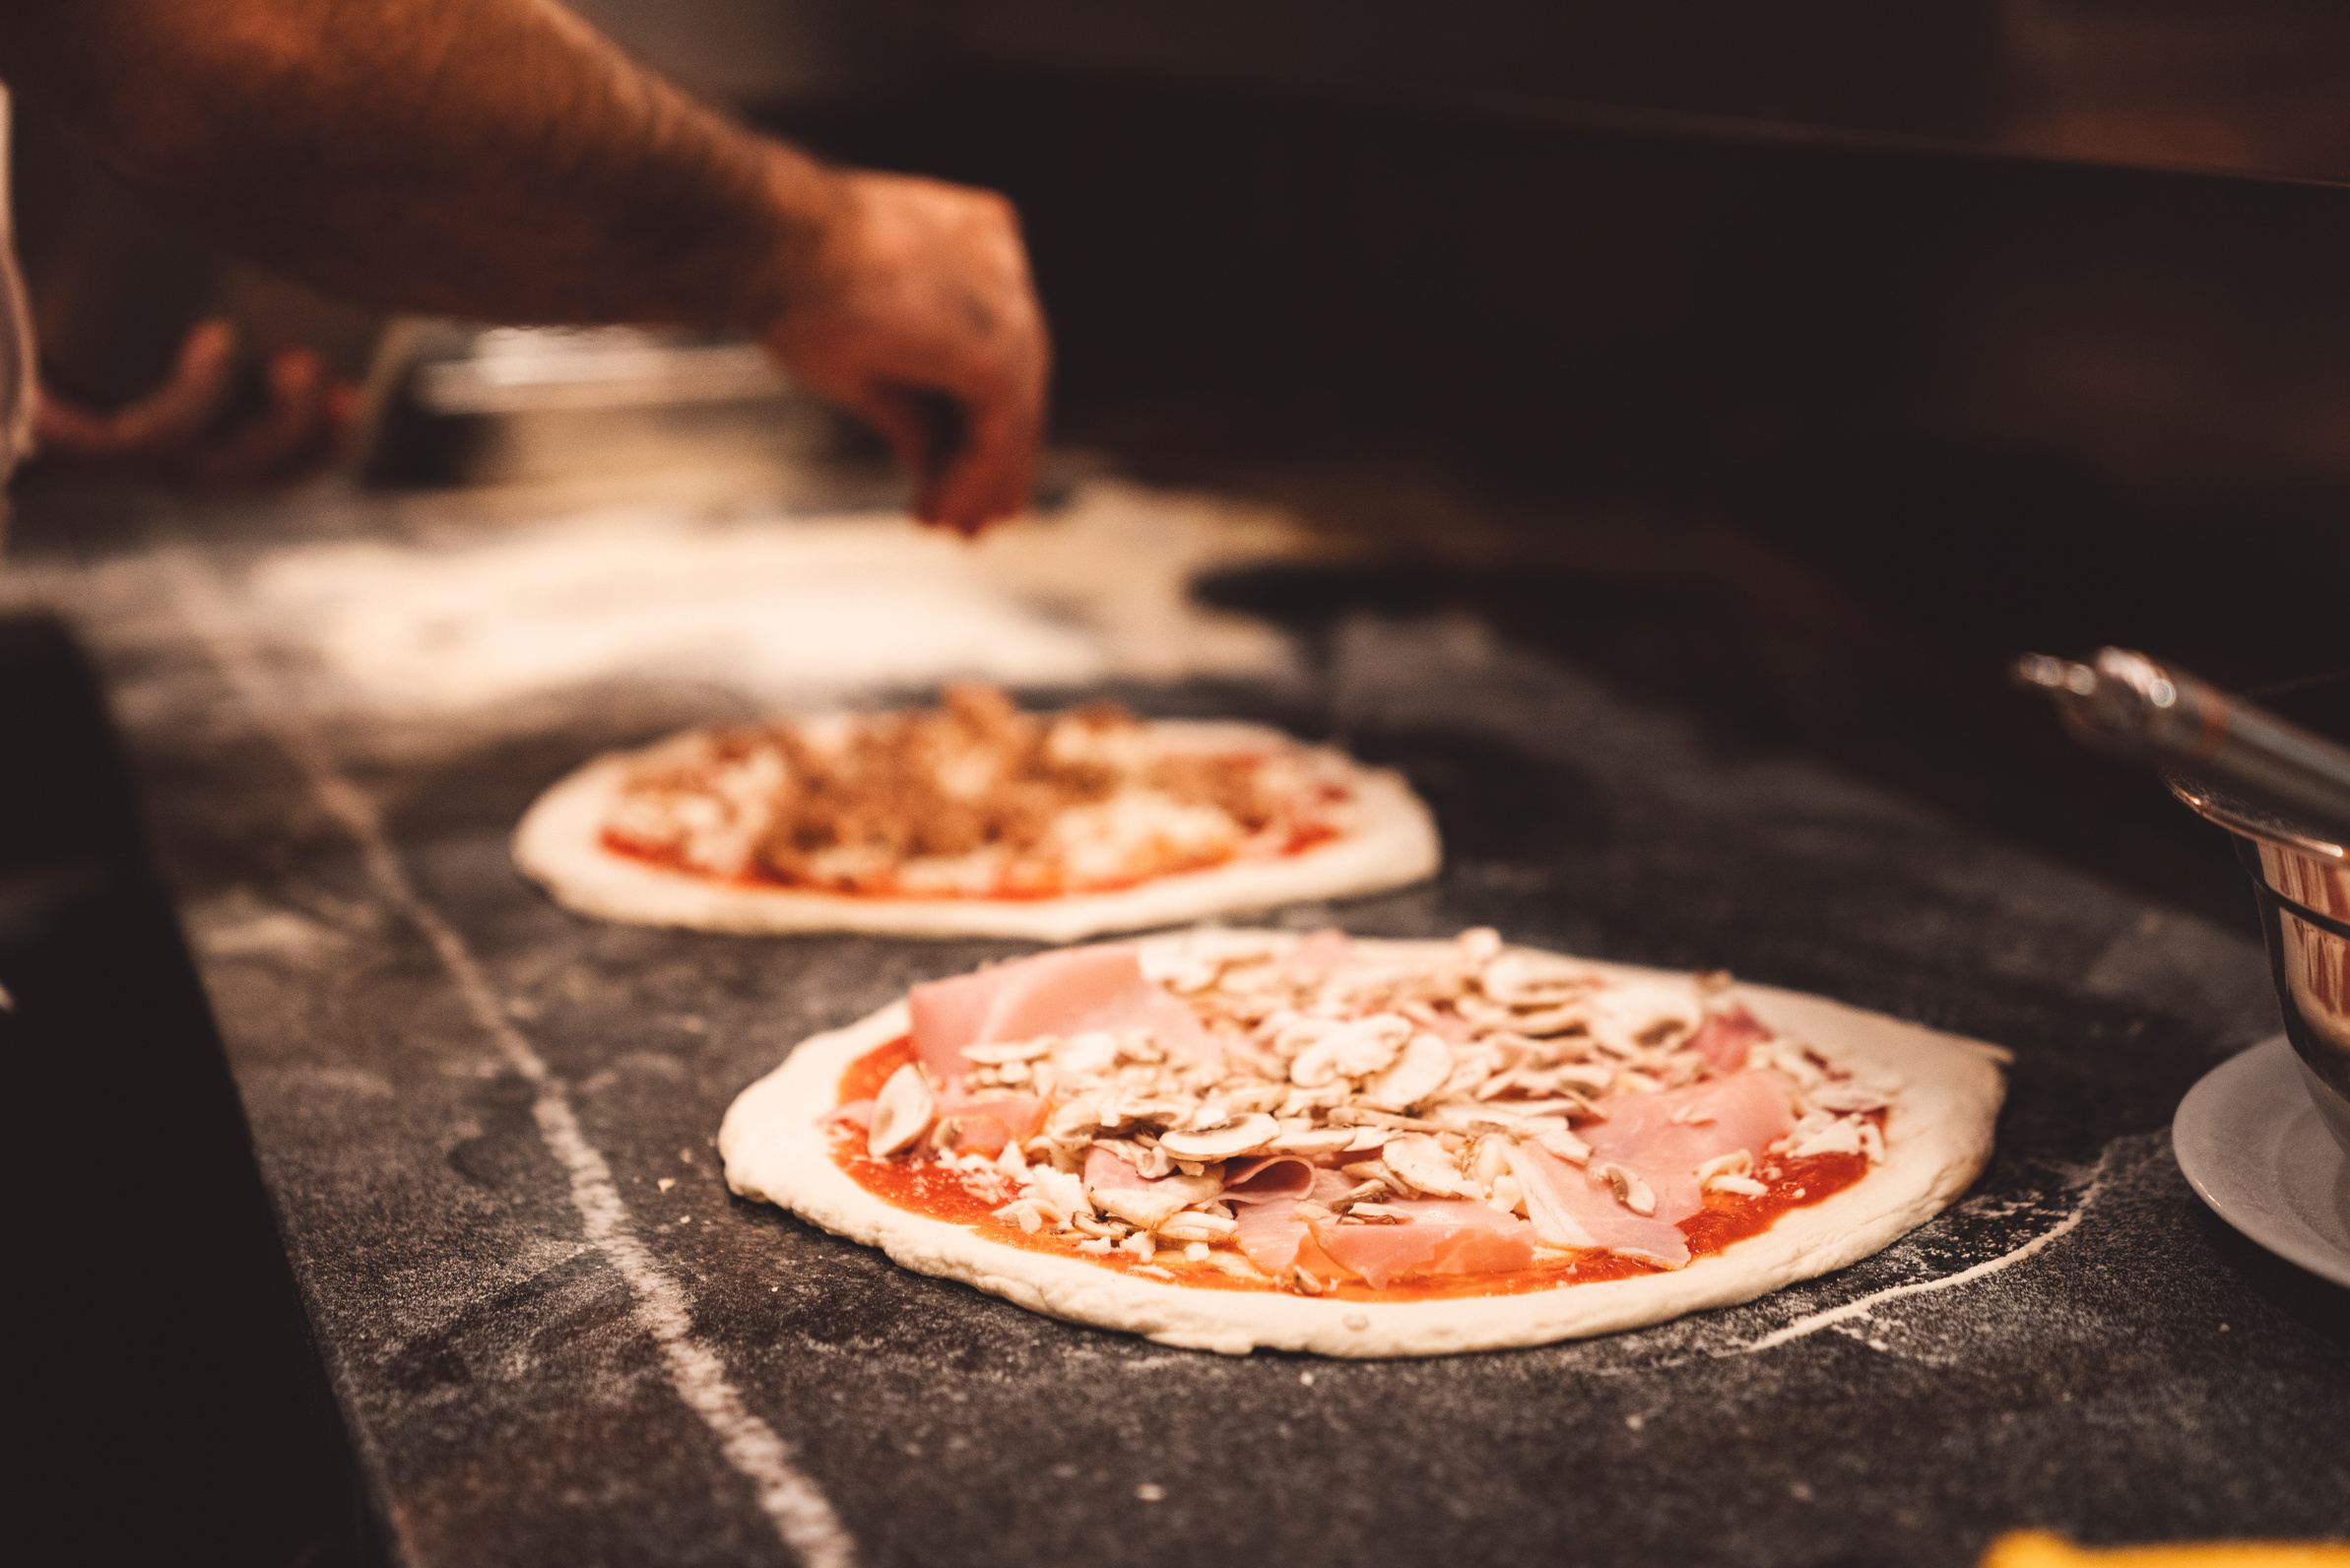 Neapolitan pizza in the making